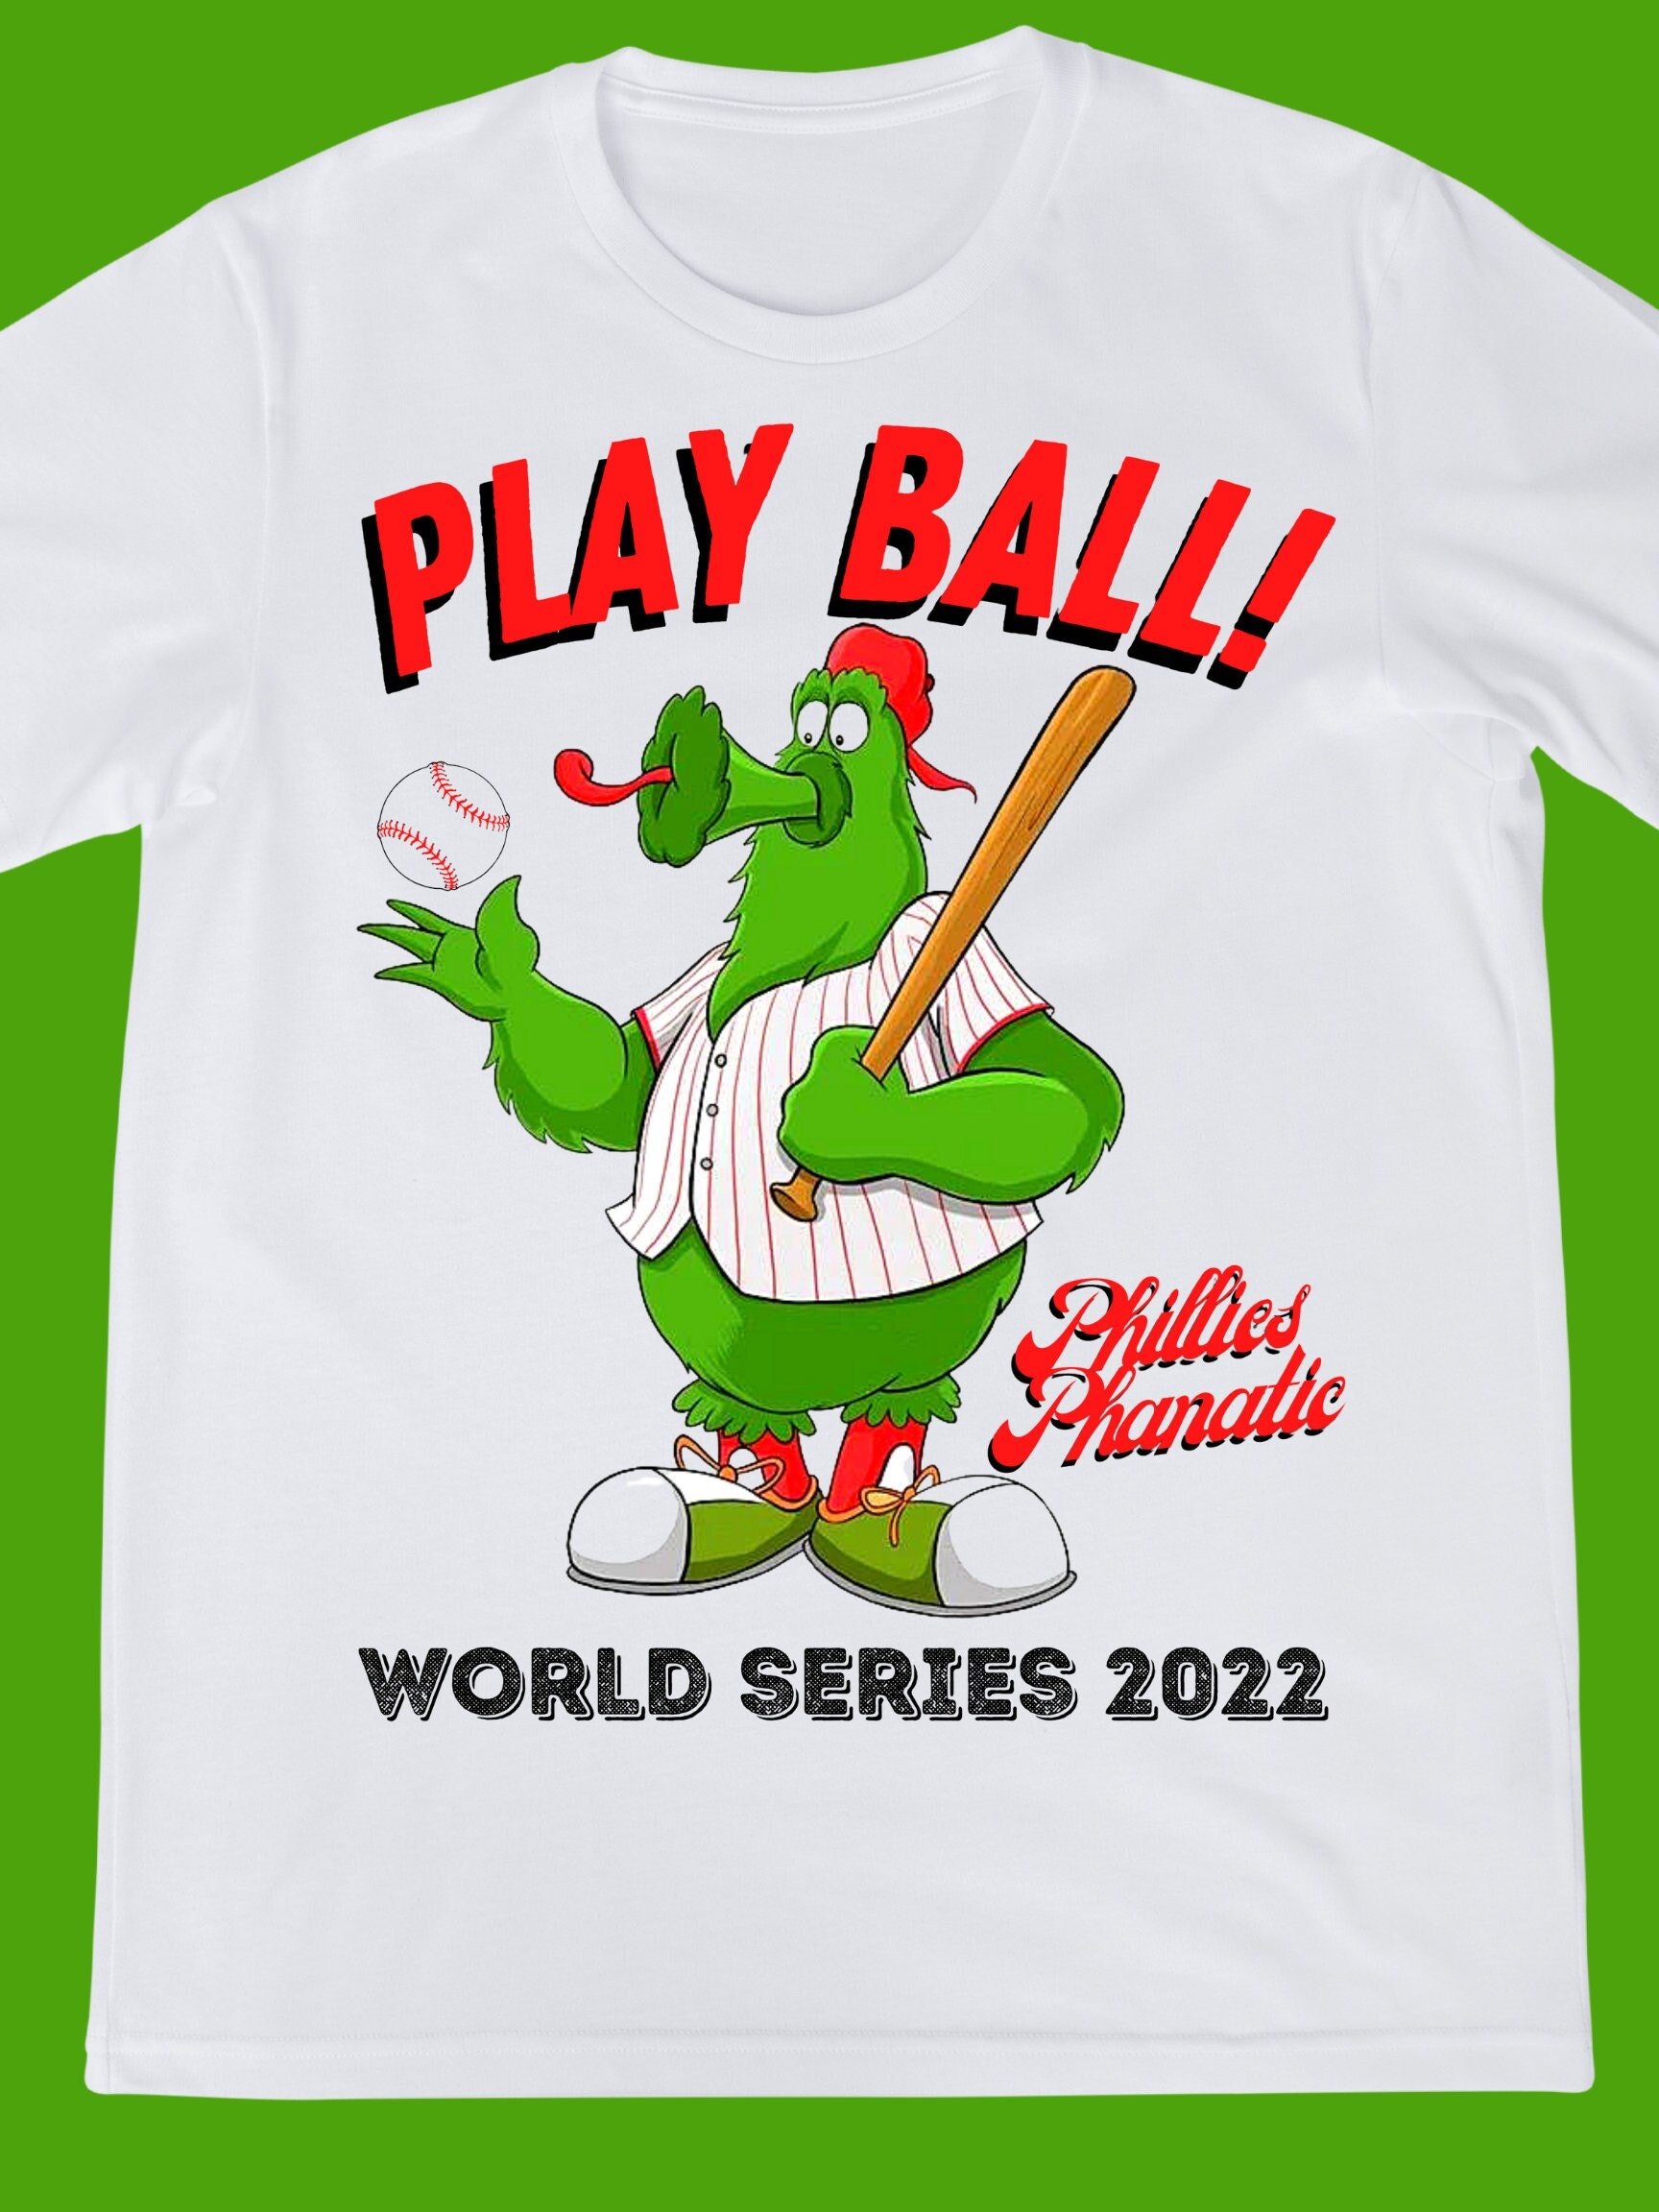 phillies world series 2022 t shirt